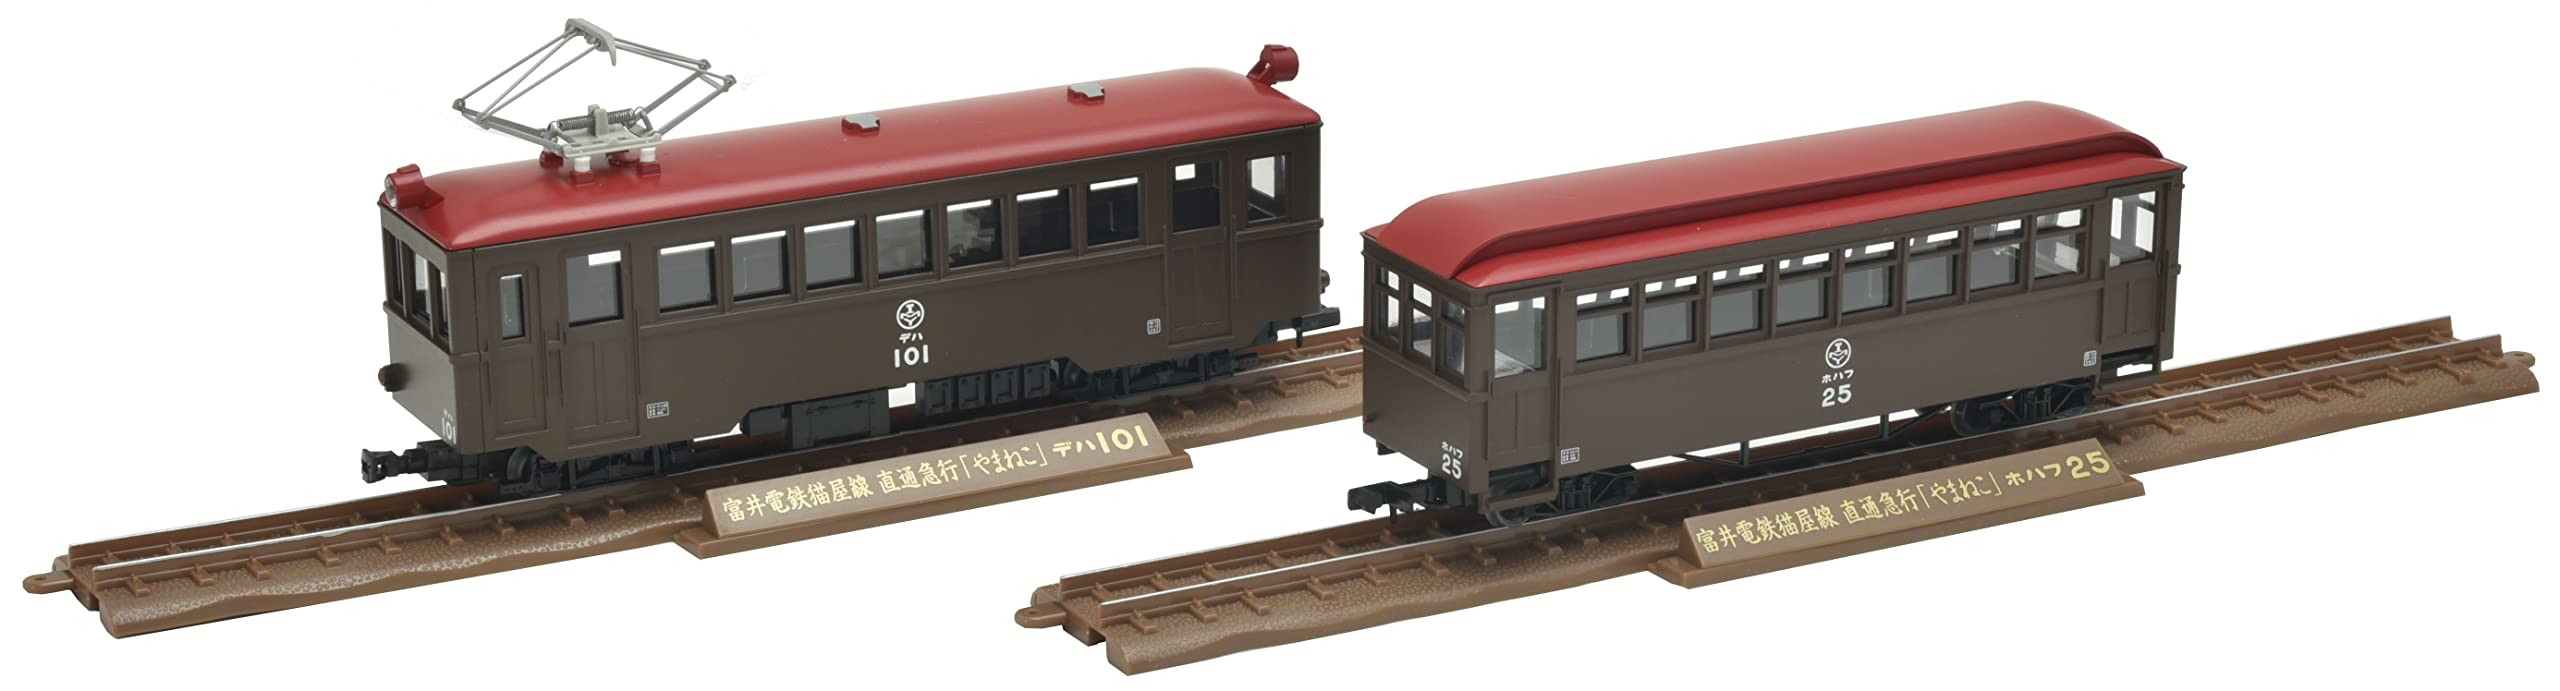 Tomytec Japan Railway Collection Iron Collection Voie étroite 80 Ligne Nekoya Yamaneko Deha 101 + Hohafu 25 2 Ensemble de voitures Diorama 315490